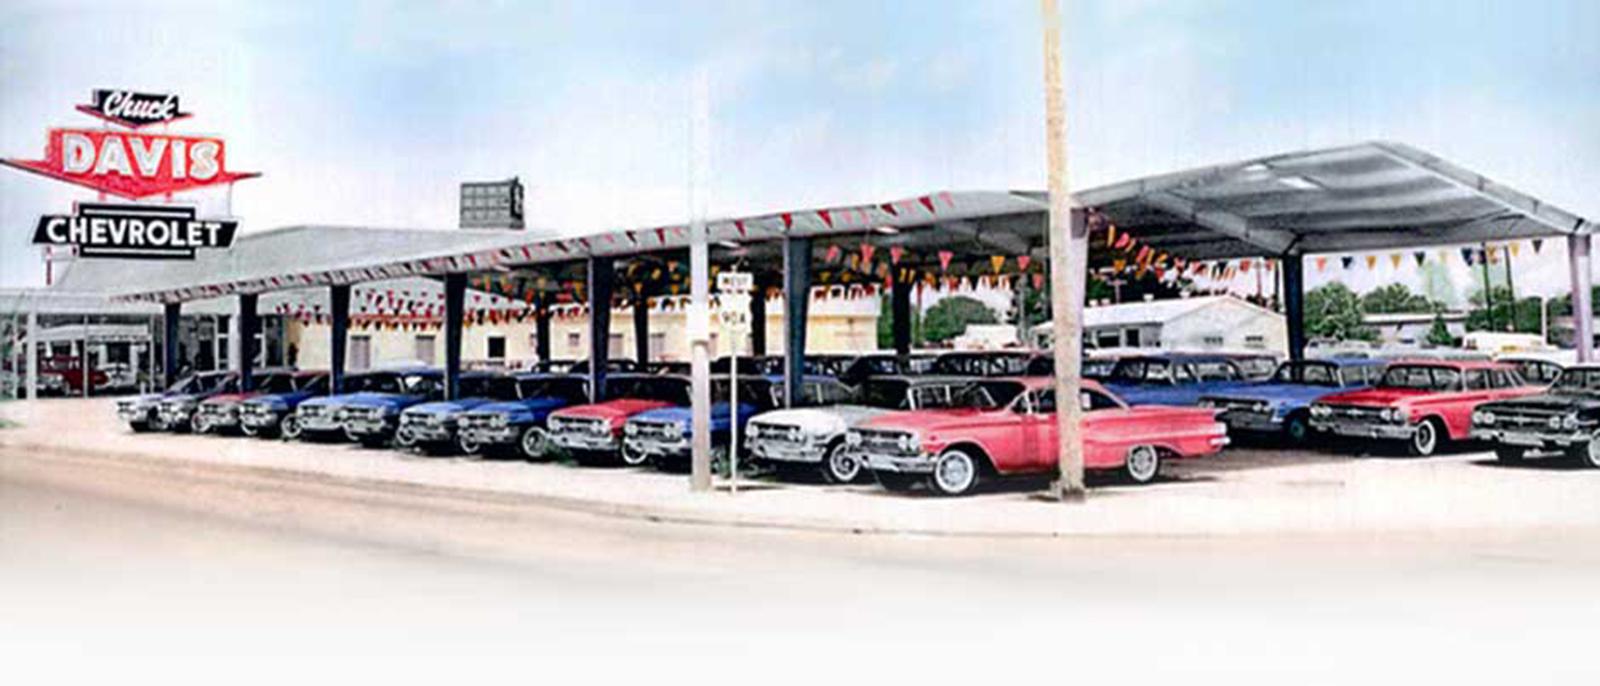 Davis Chevrolet - Since 1959